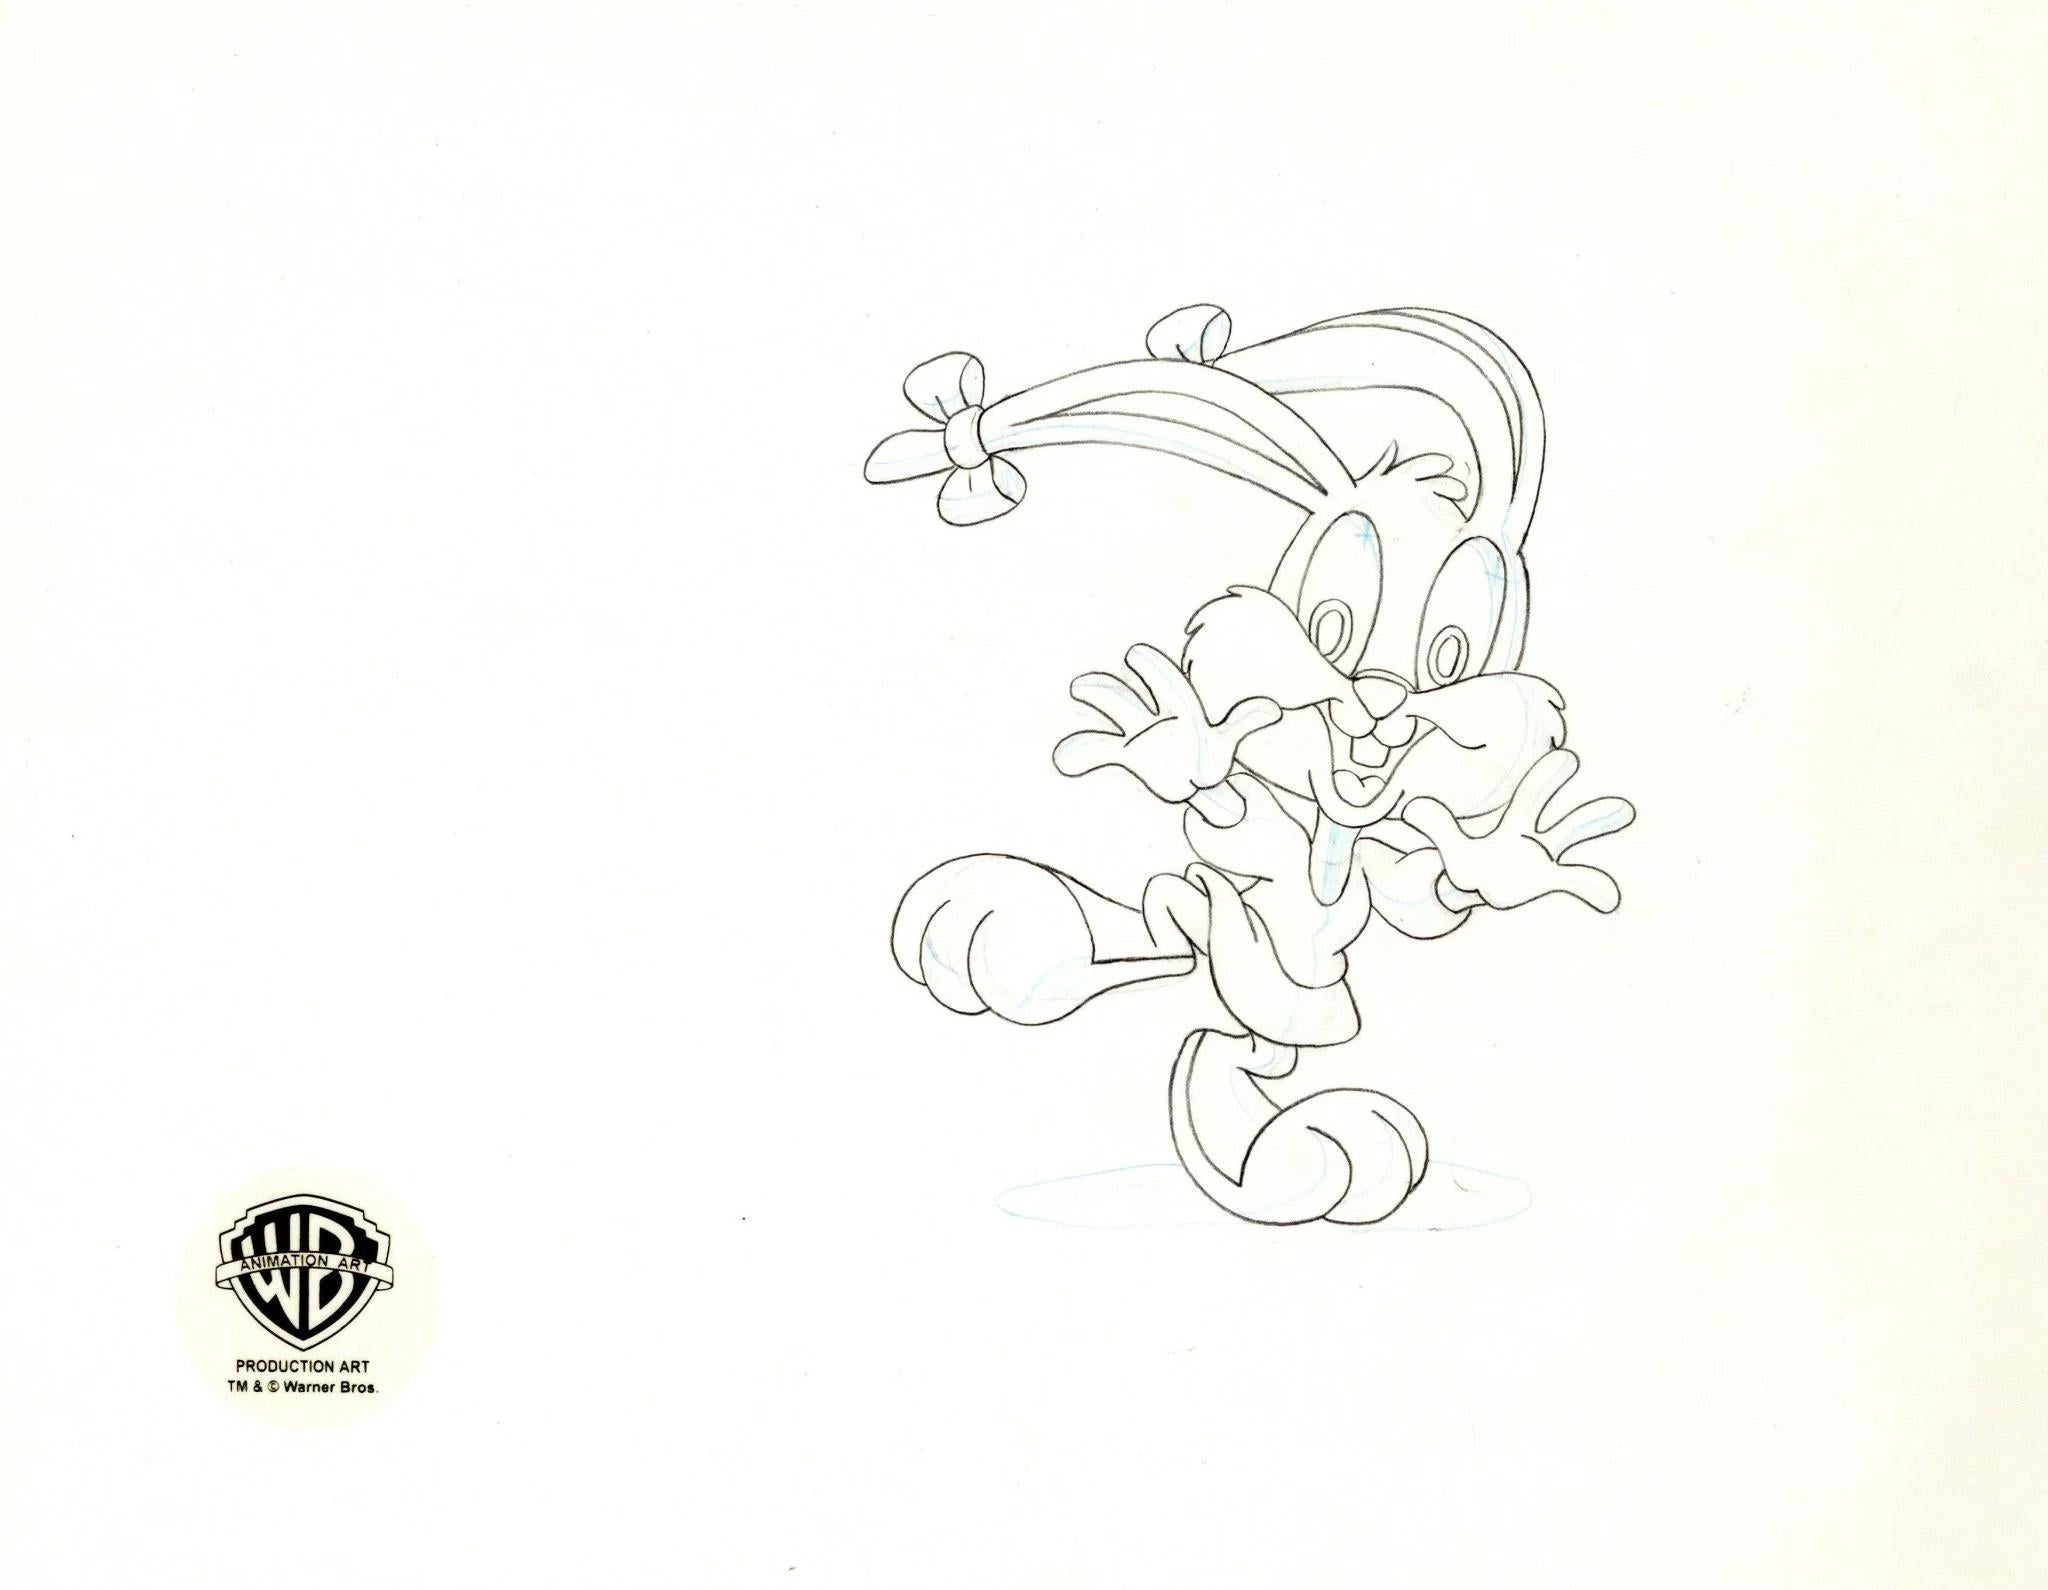 Tiny Toons Original Production Drawing: Babs Bunny - Art by Warner Bros. Studio Artists